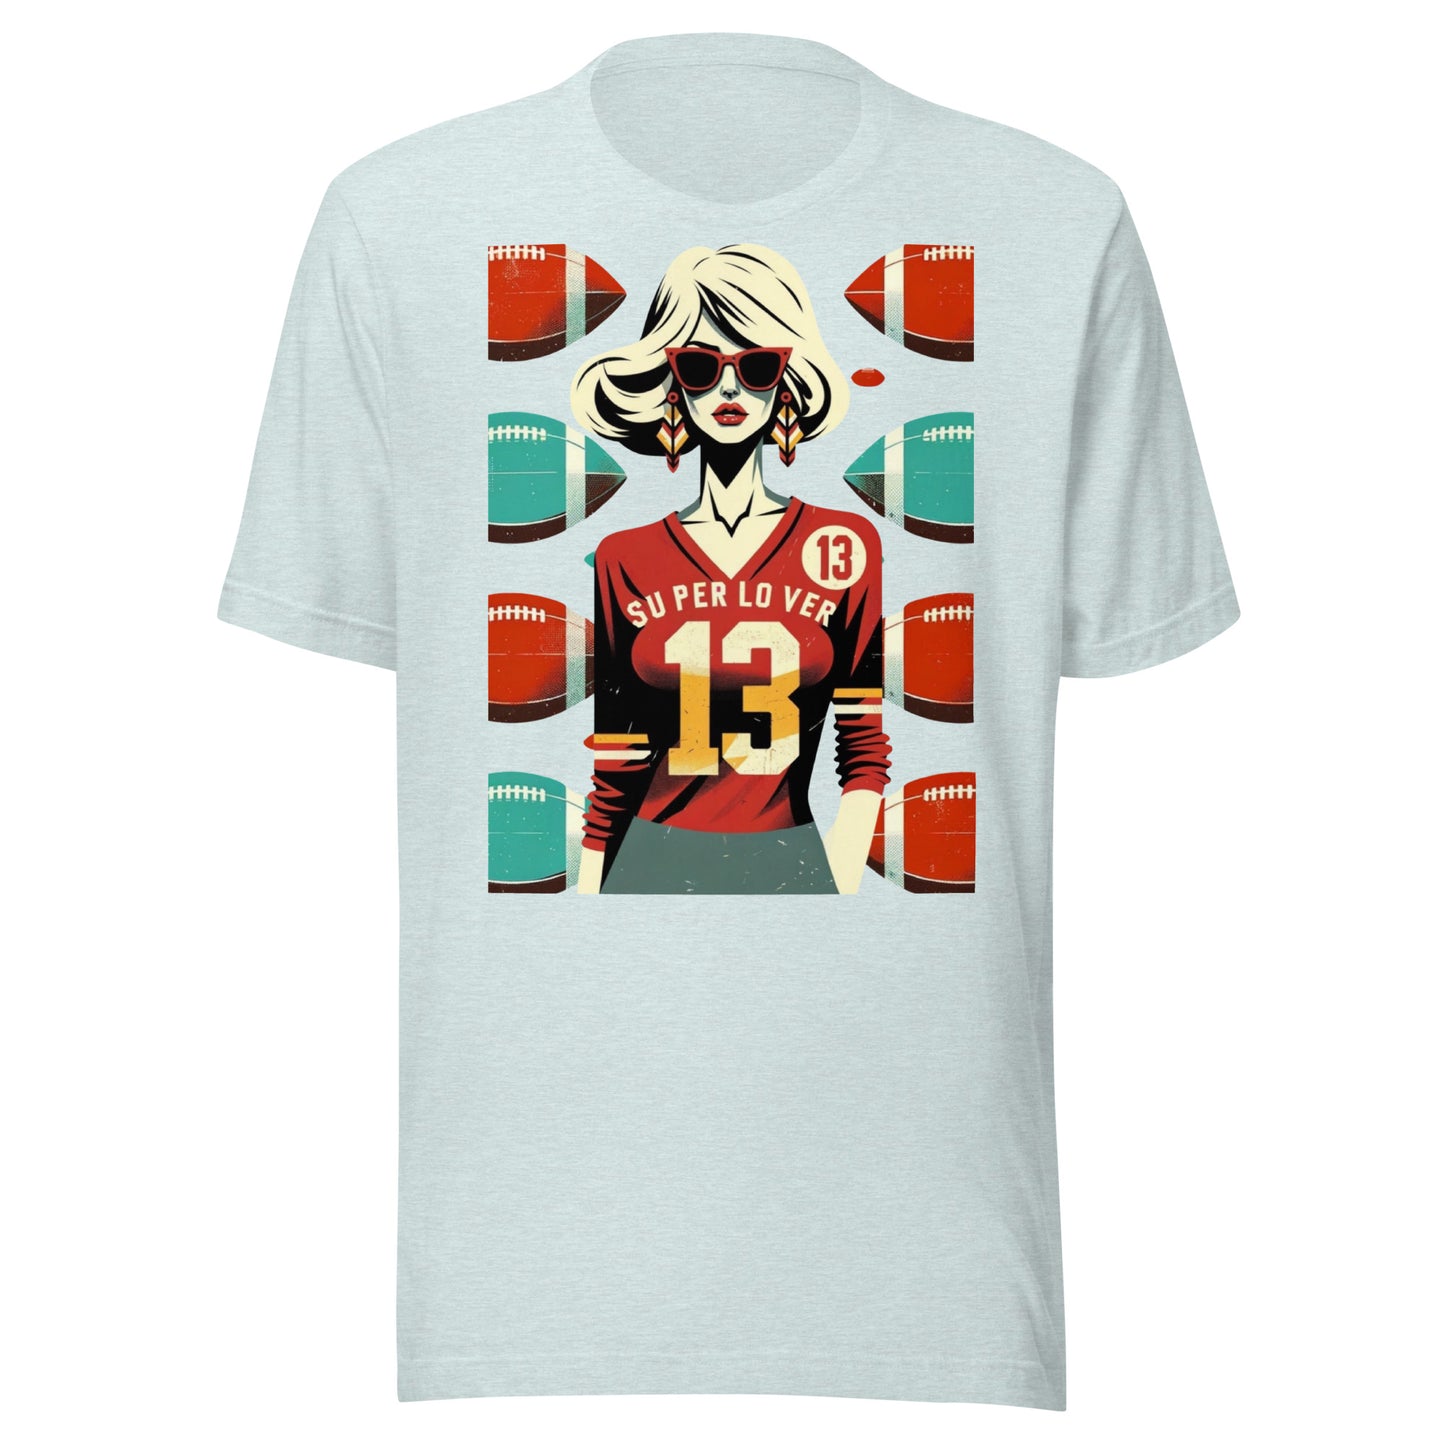 Super Football Lover Unisex t-shirt